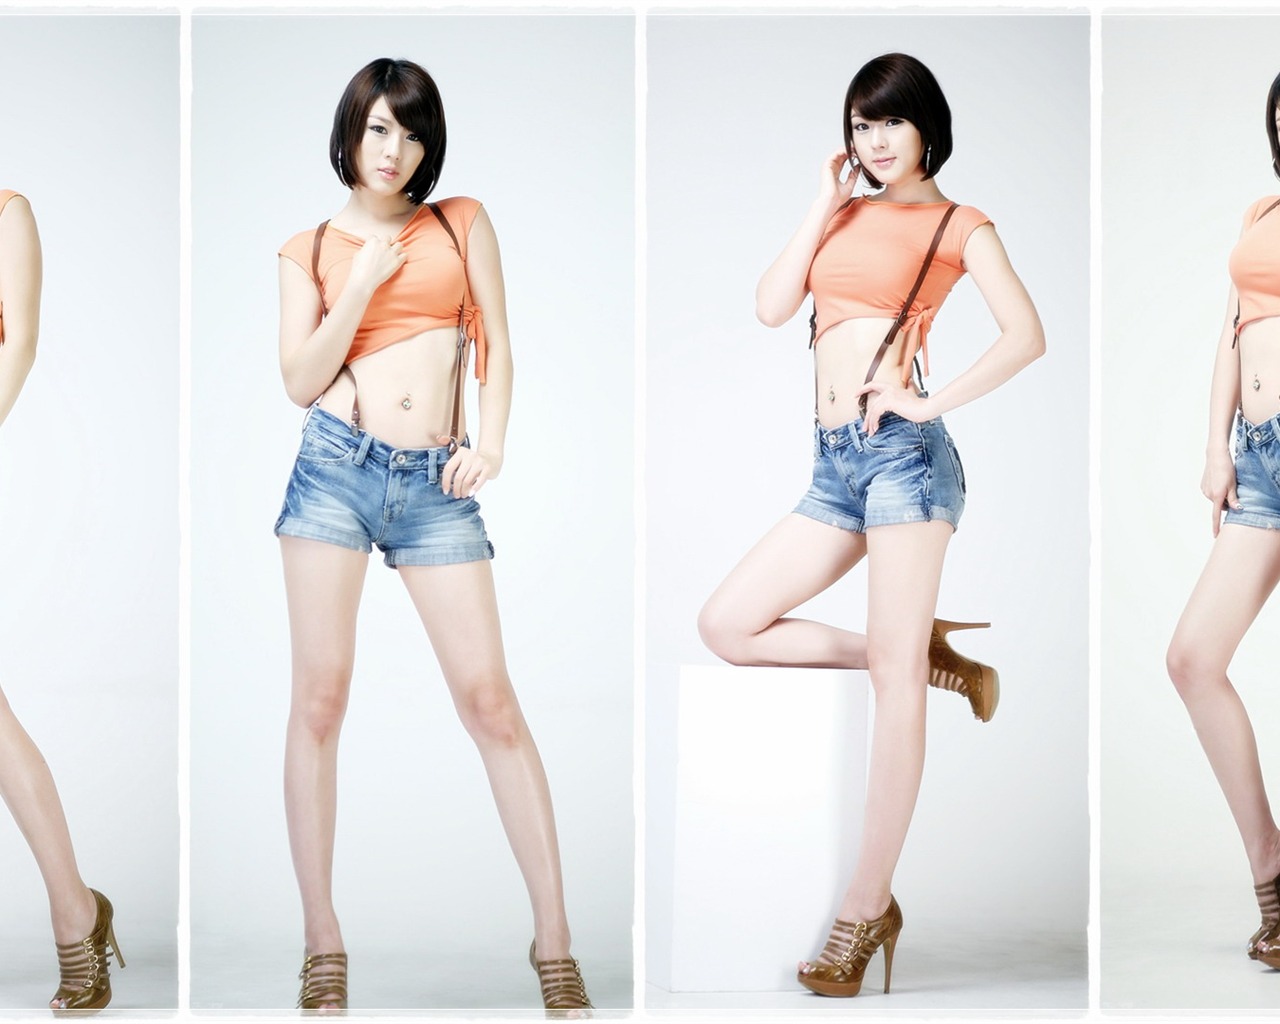 韓國車展模特 Hwang Mi Hee & Song Jina #15 - 1280x1024